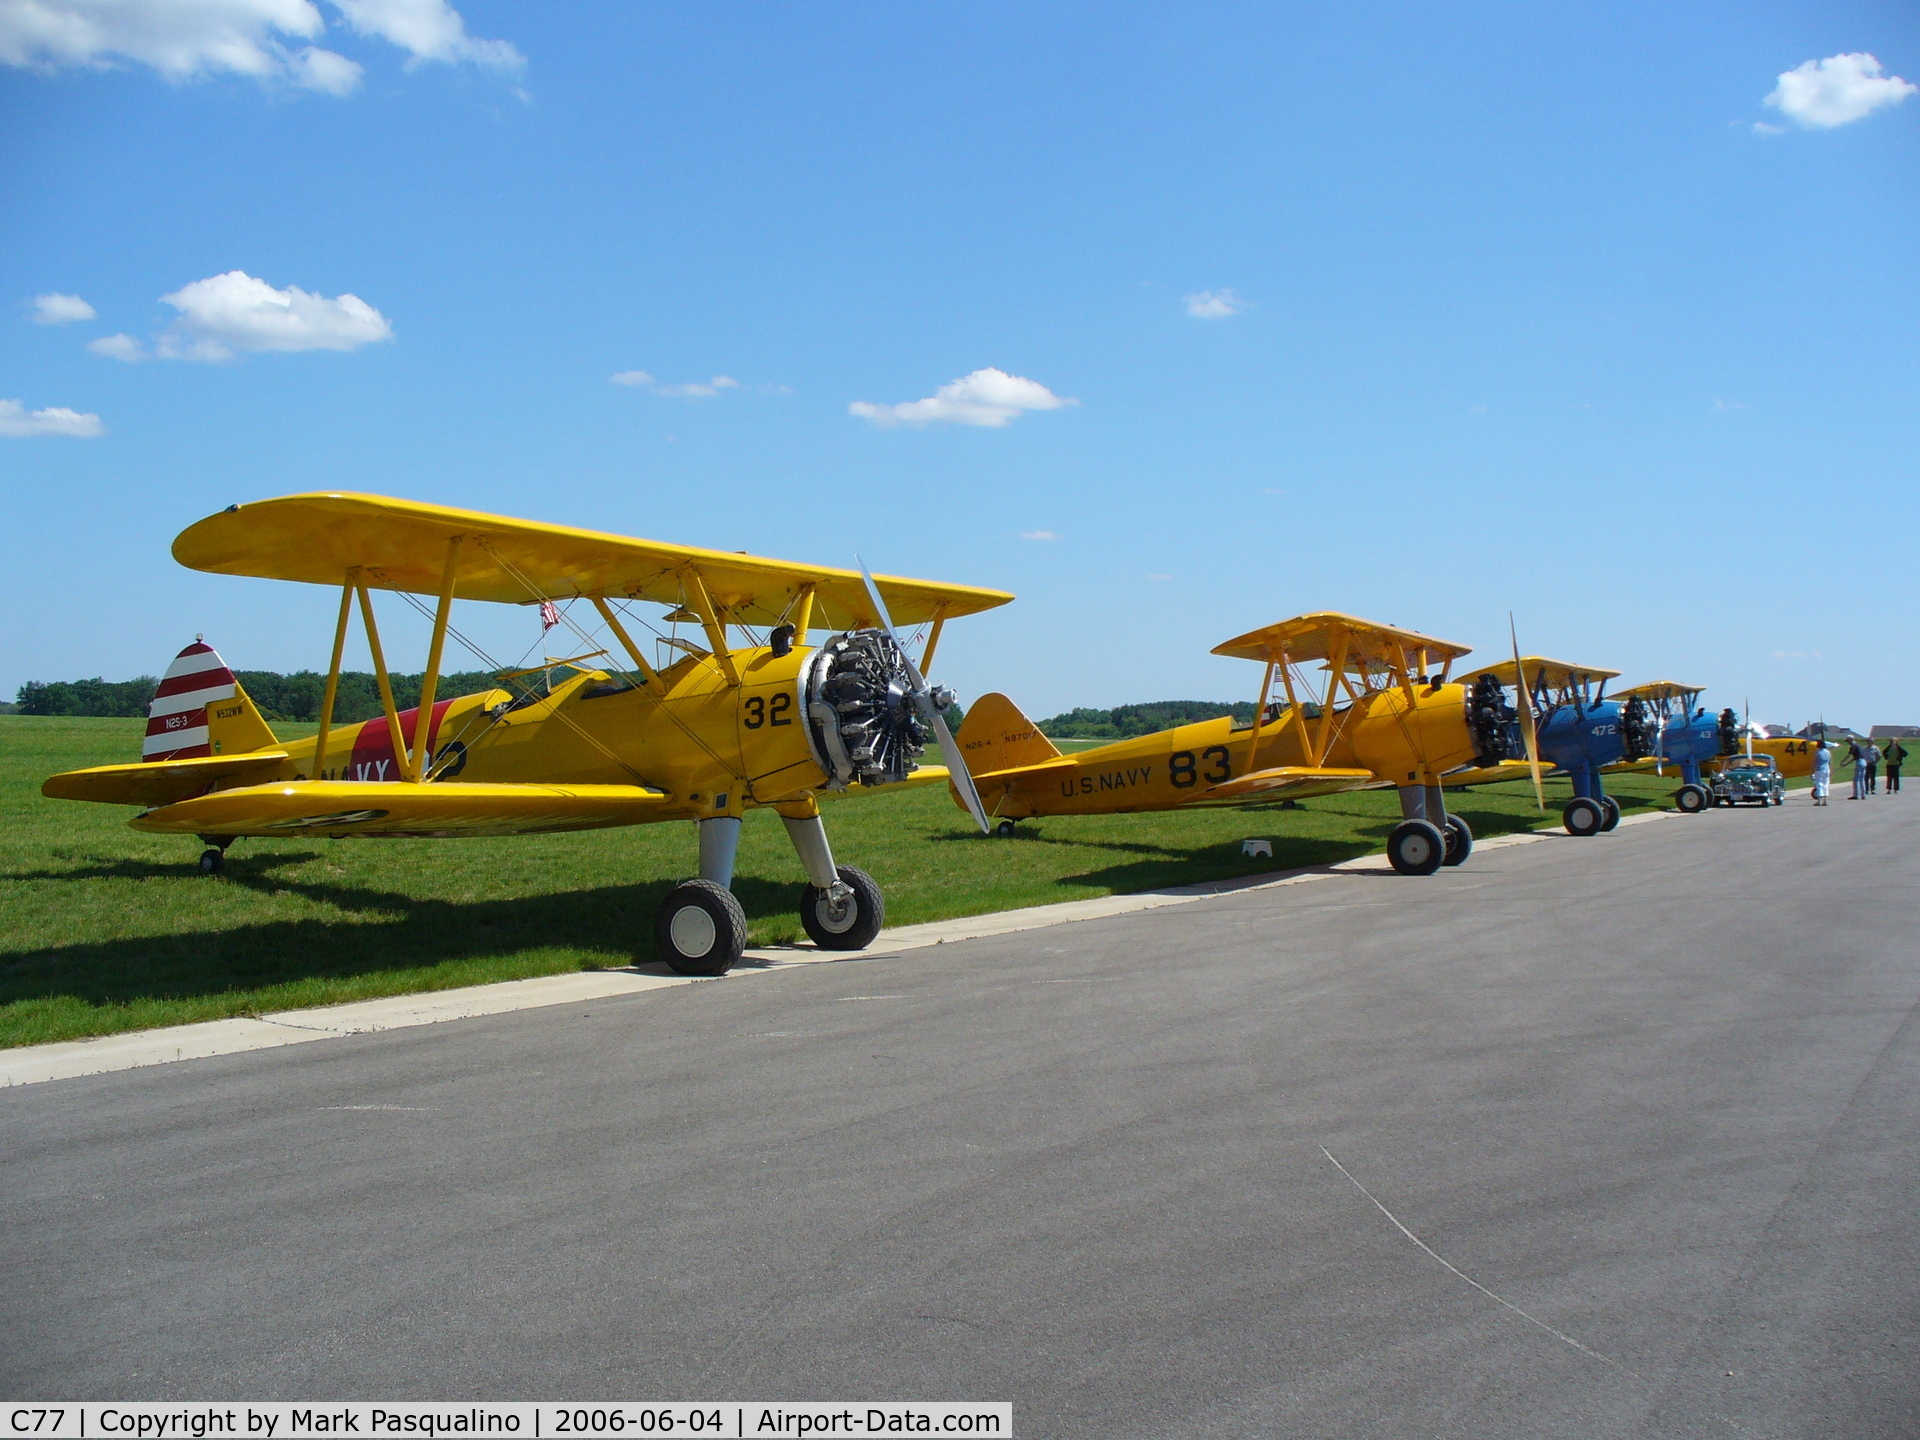 Poplar Grove Airport (C77) - Four of nine Stearmans based at Poplar Grove